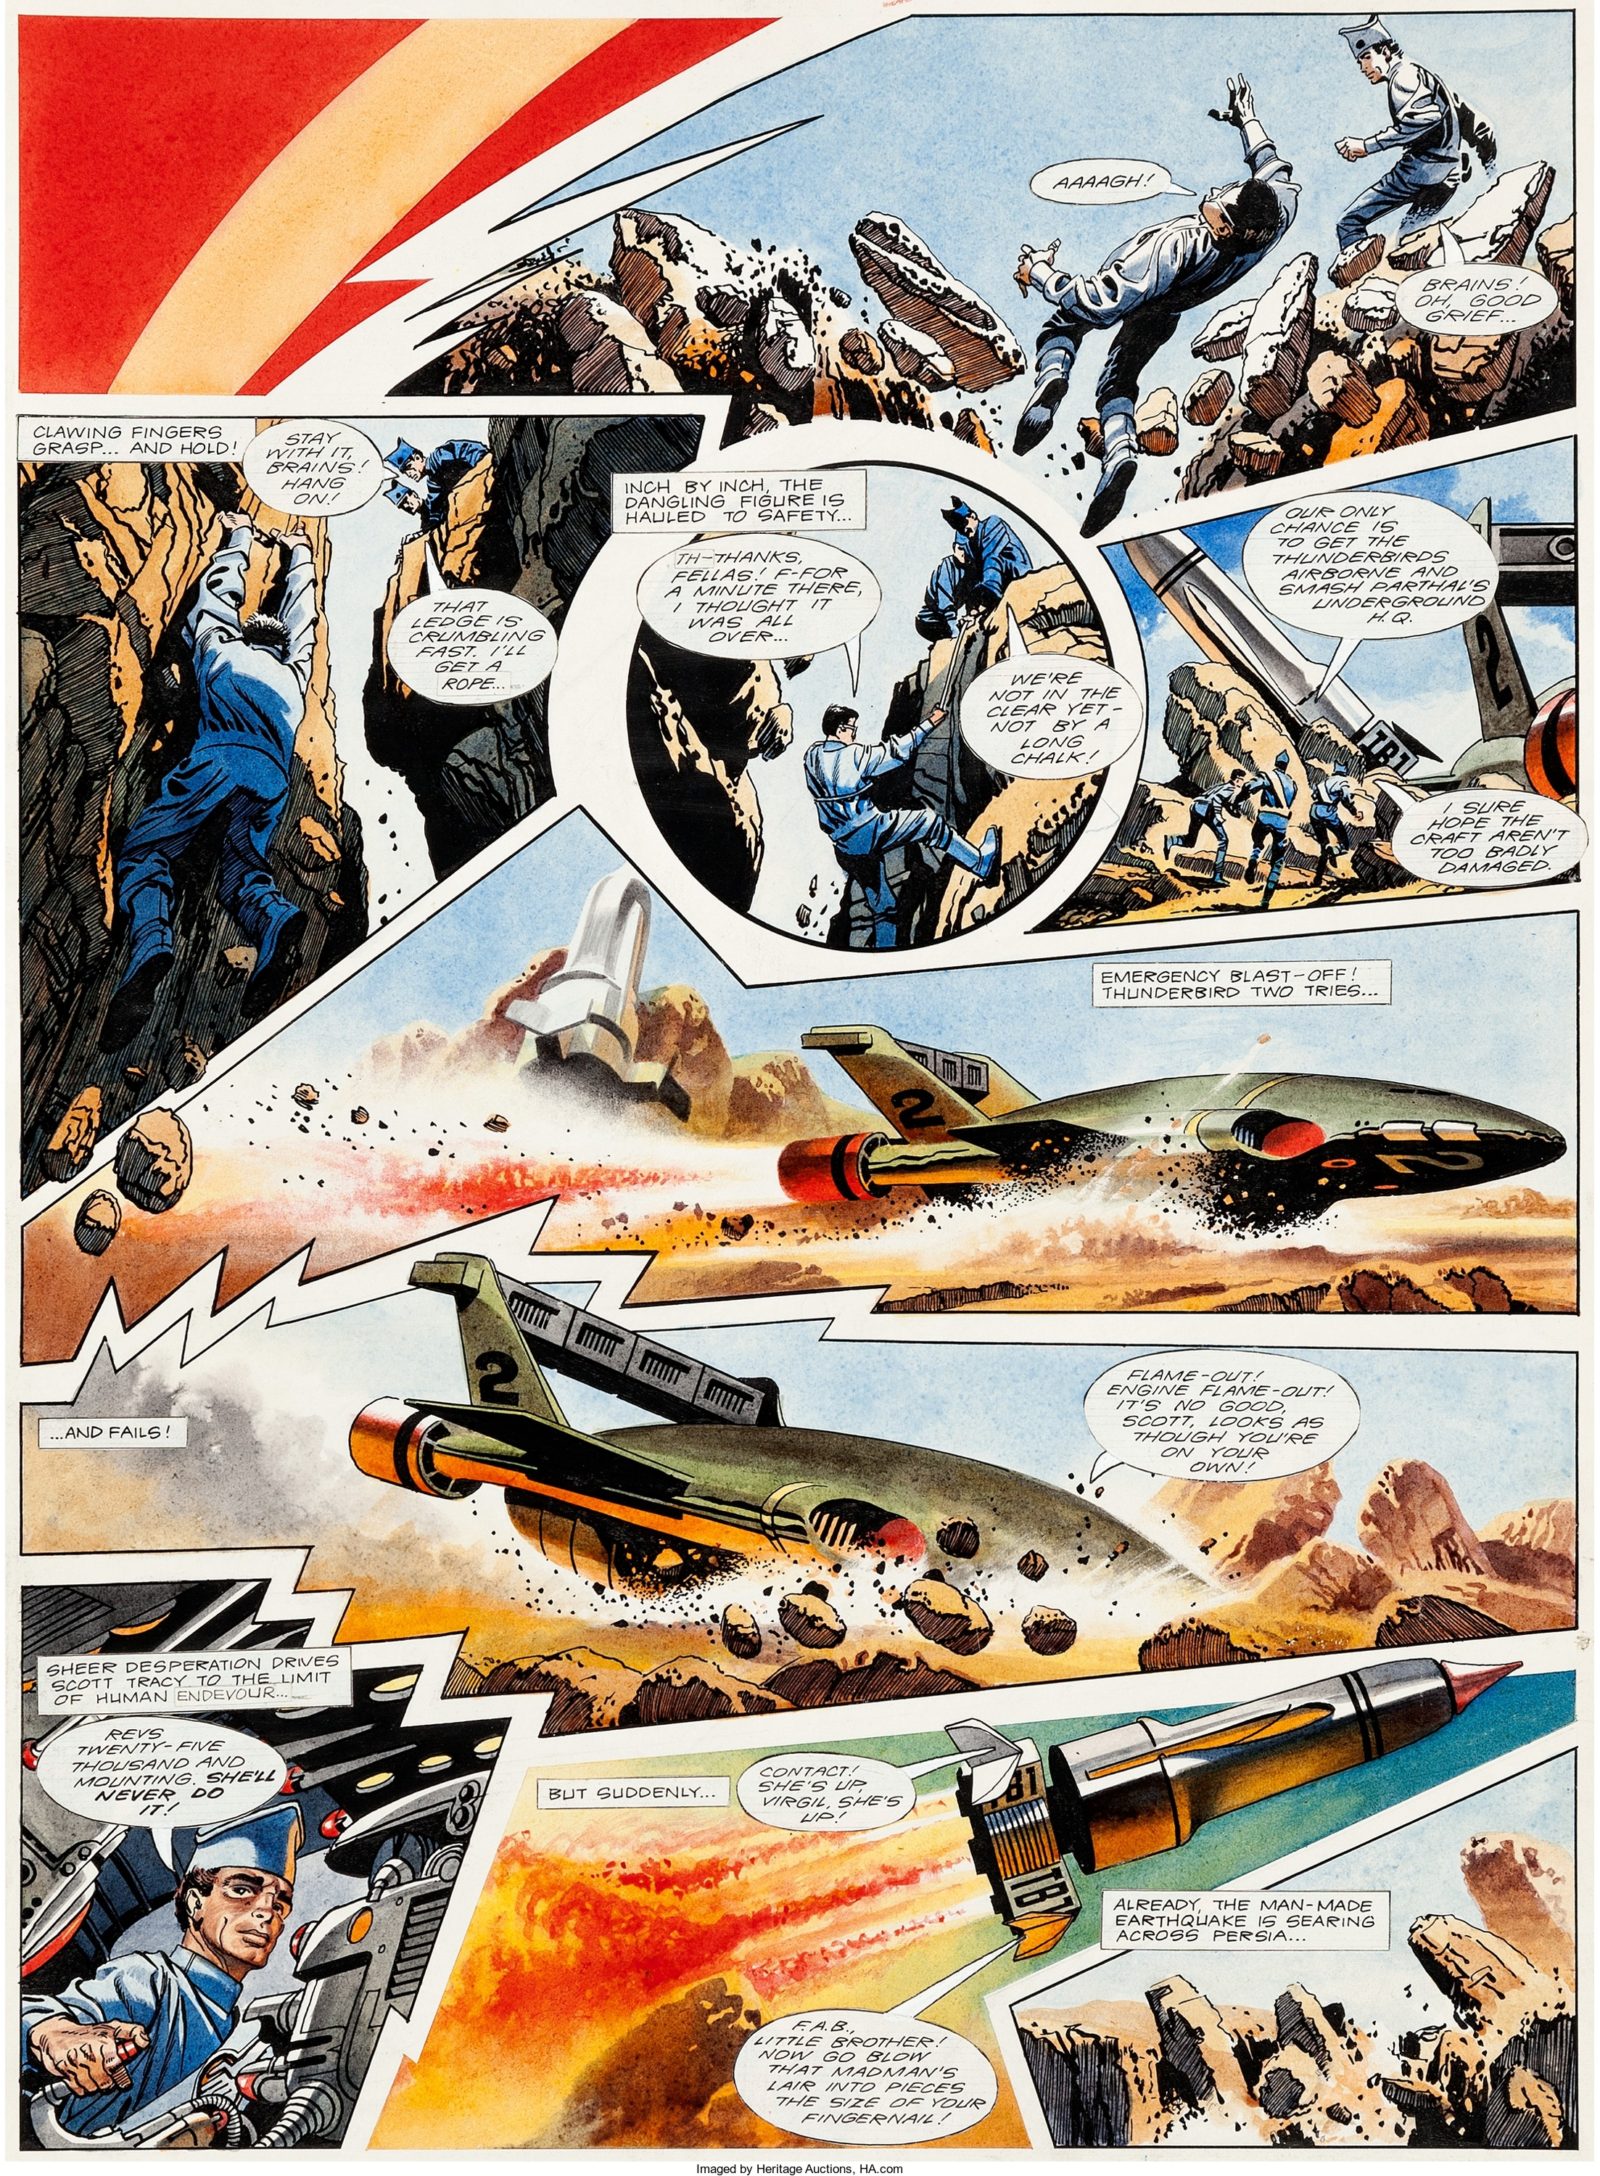 TV21 146 - Thunderbirds by Frank Bellamy (Trimmed)